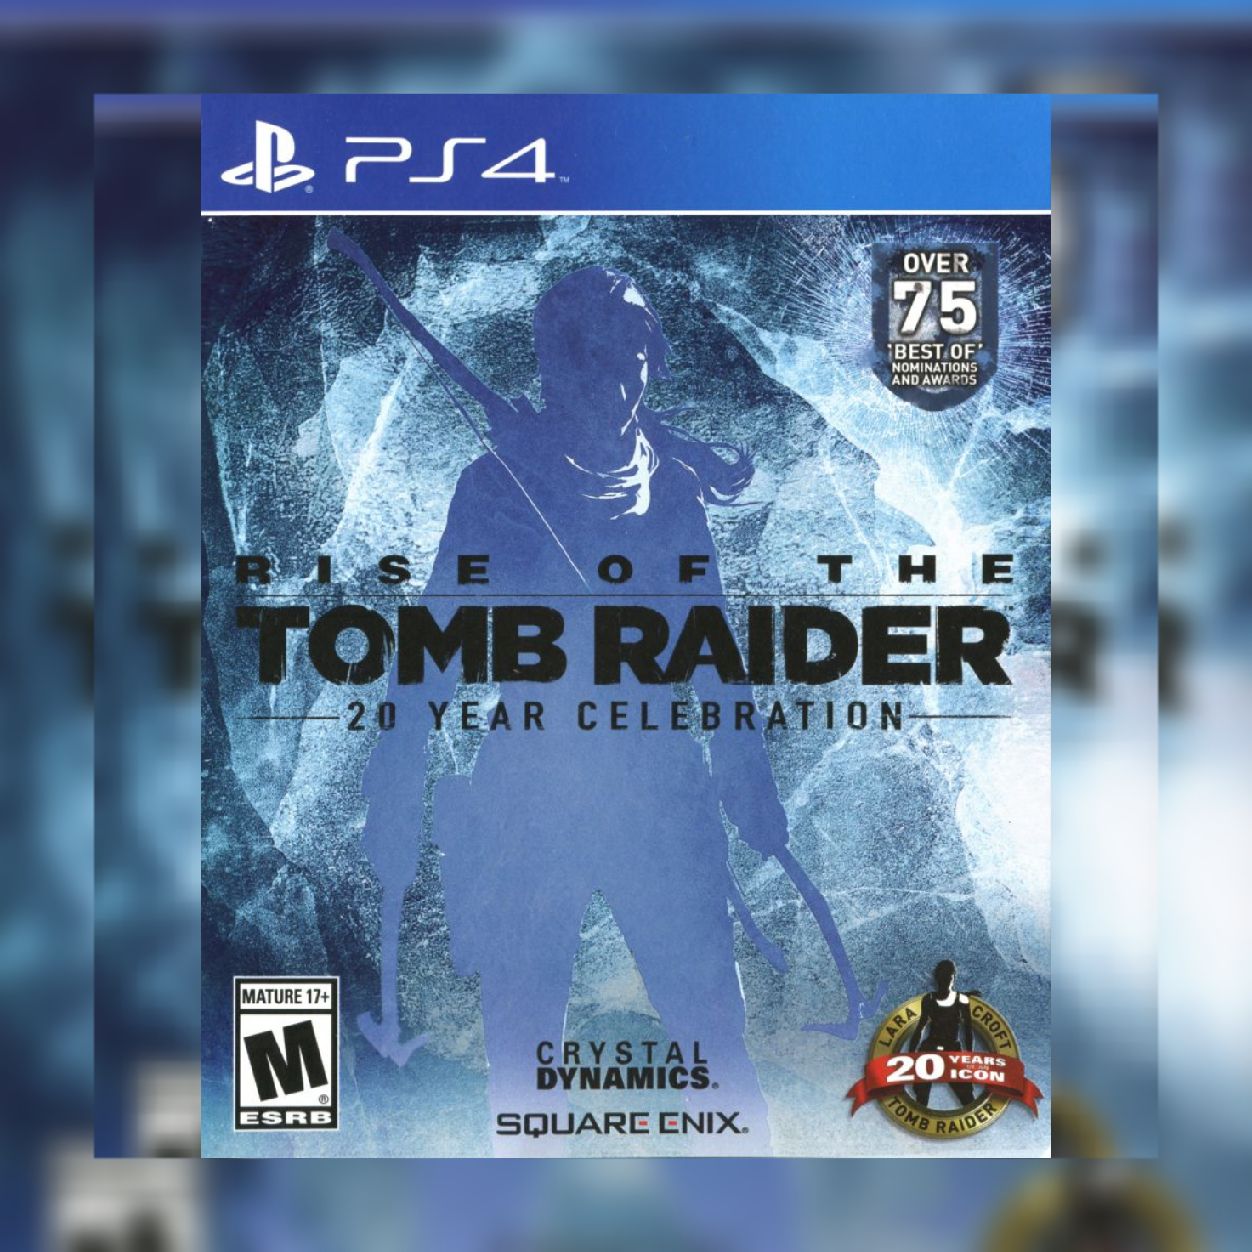 Lara Croft: Tomb Raider, 20 anos depois ainda somos fãs?